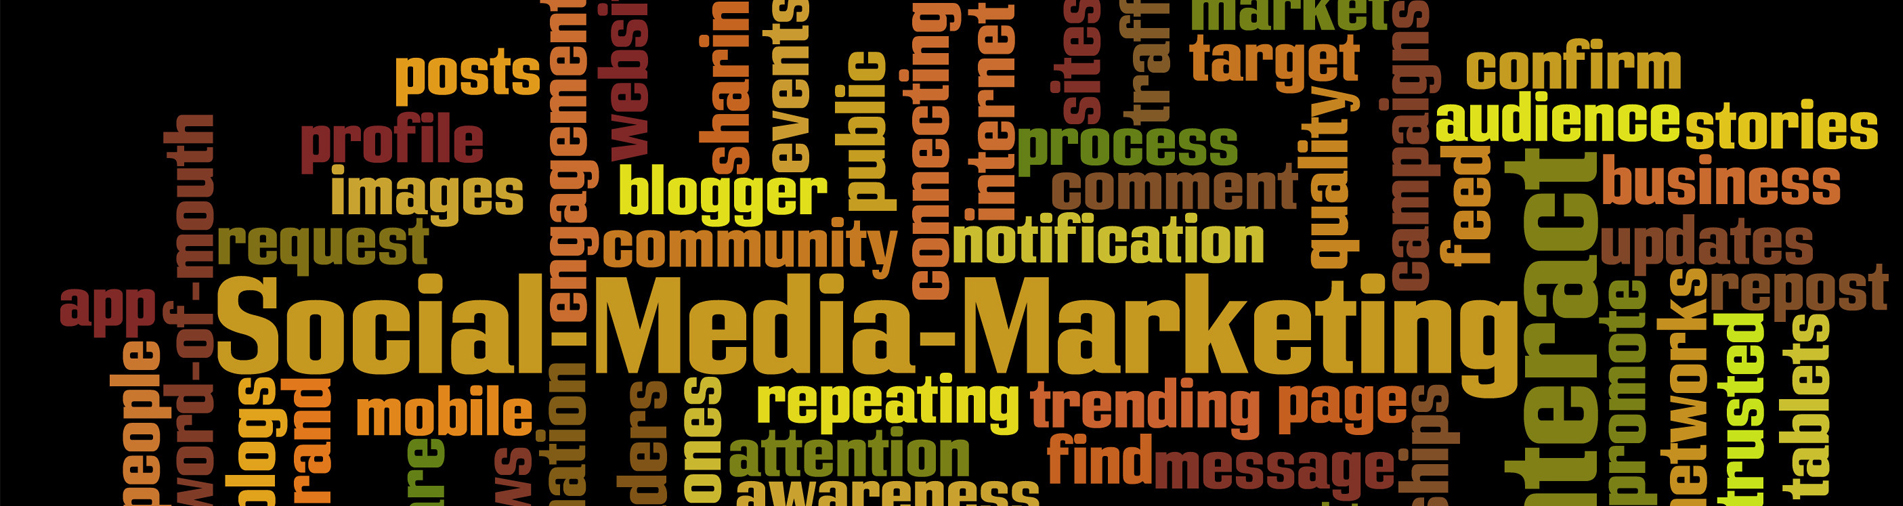 Key Tools for Social Media Marketing